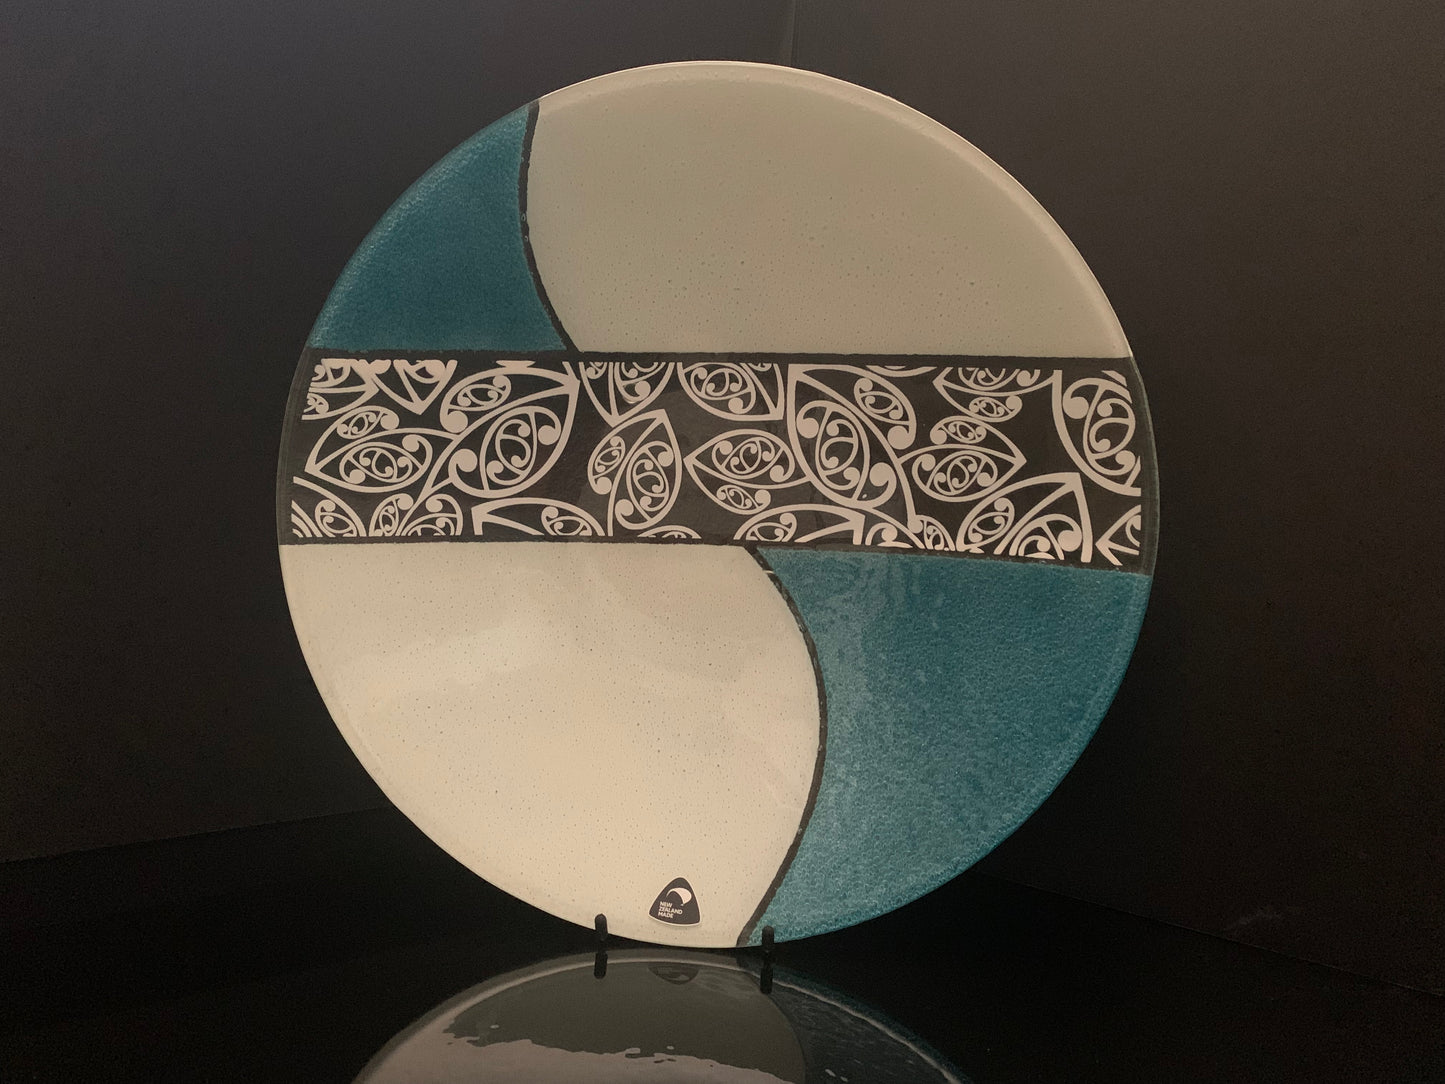 Fused Glass Bowl by Maori Boy - Kowhaiwhai Design (aqua and white) 40cm